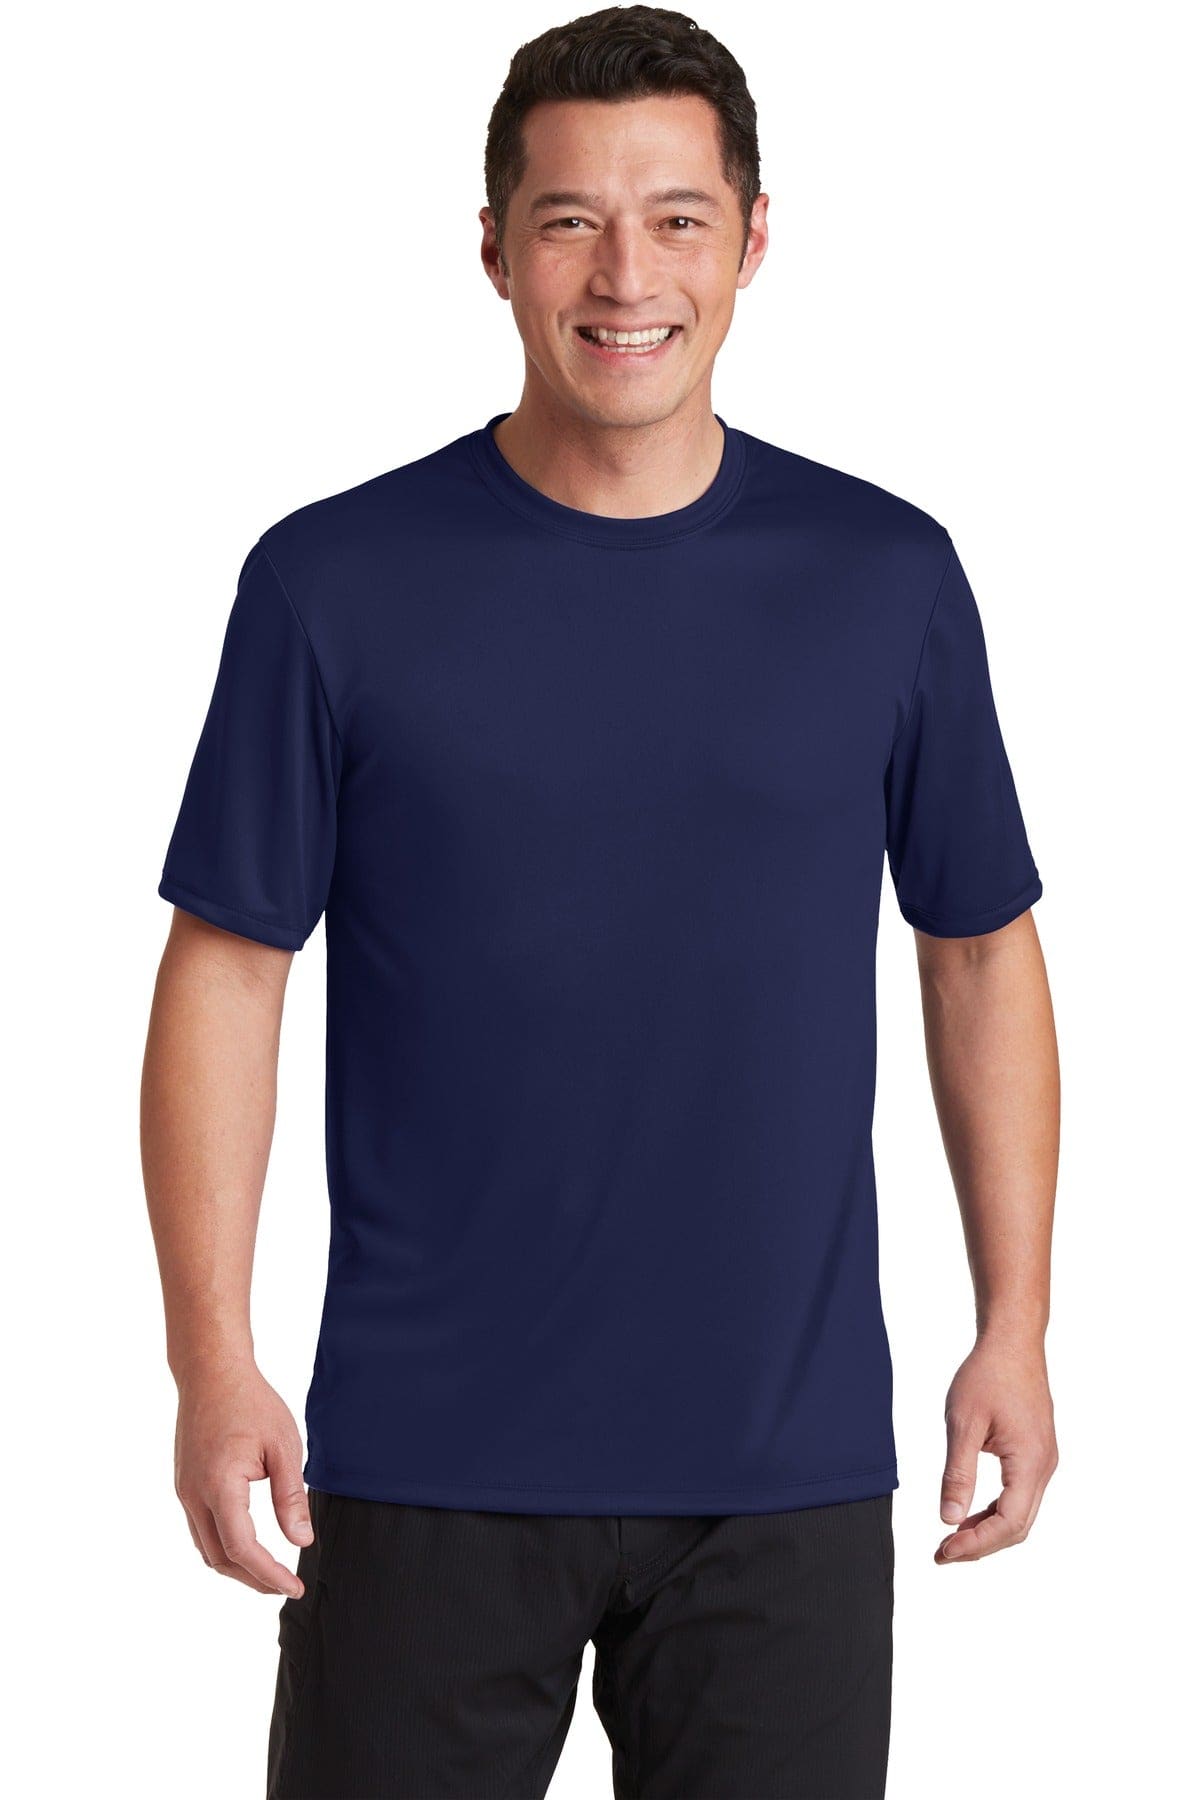 Hanes Cool Dri Performance T - shirt 4820 - Activewear T - Tops / Shirtss